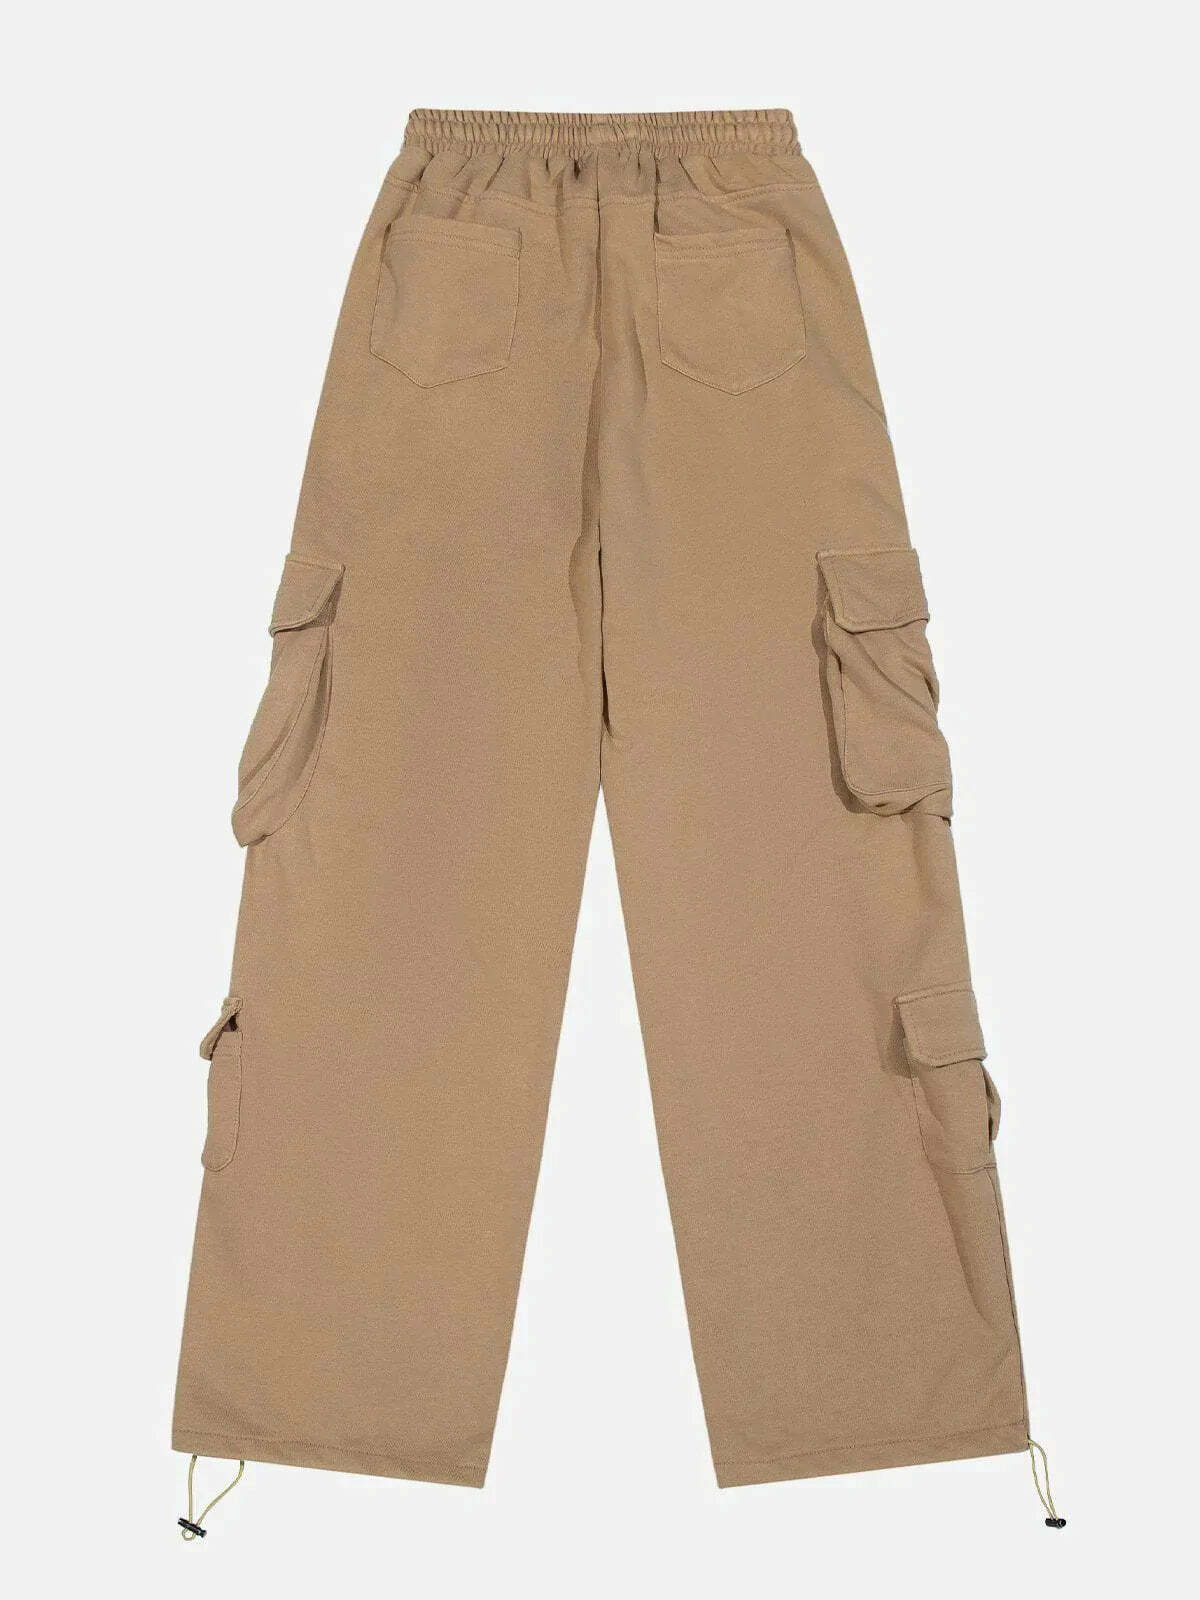 multipocket drawstring pants functional & edgy streetwear 3788